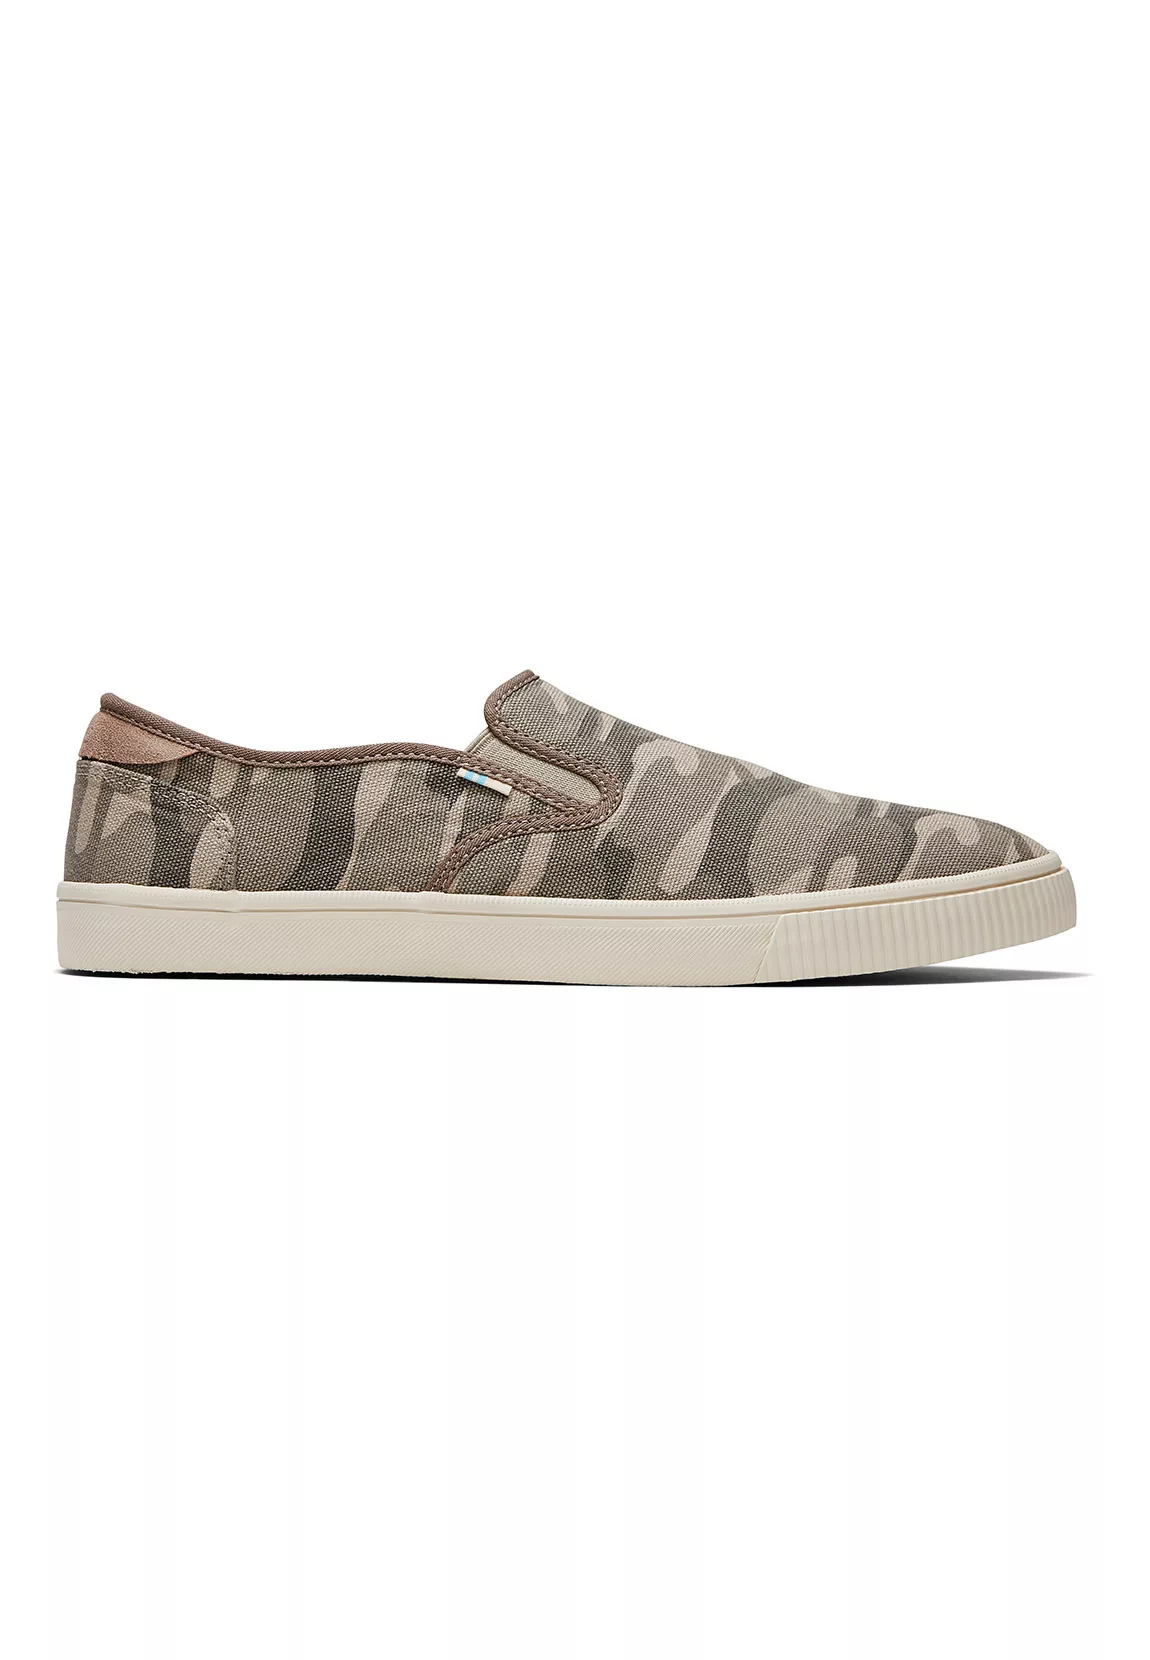 TOMS Sneaker Herren BAJA 10016334 Taupe Grey Forest Camo Camouflage günstig online kaufen